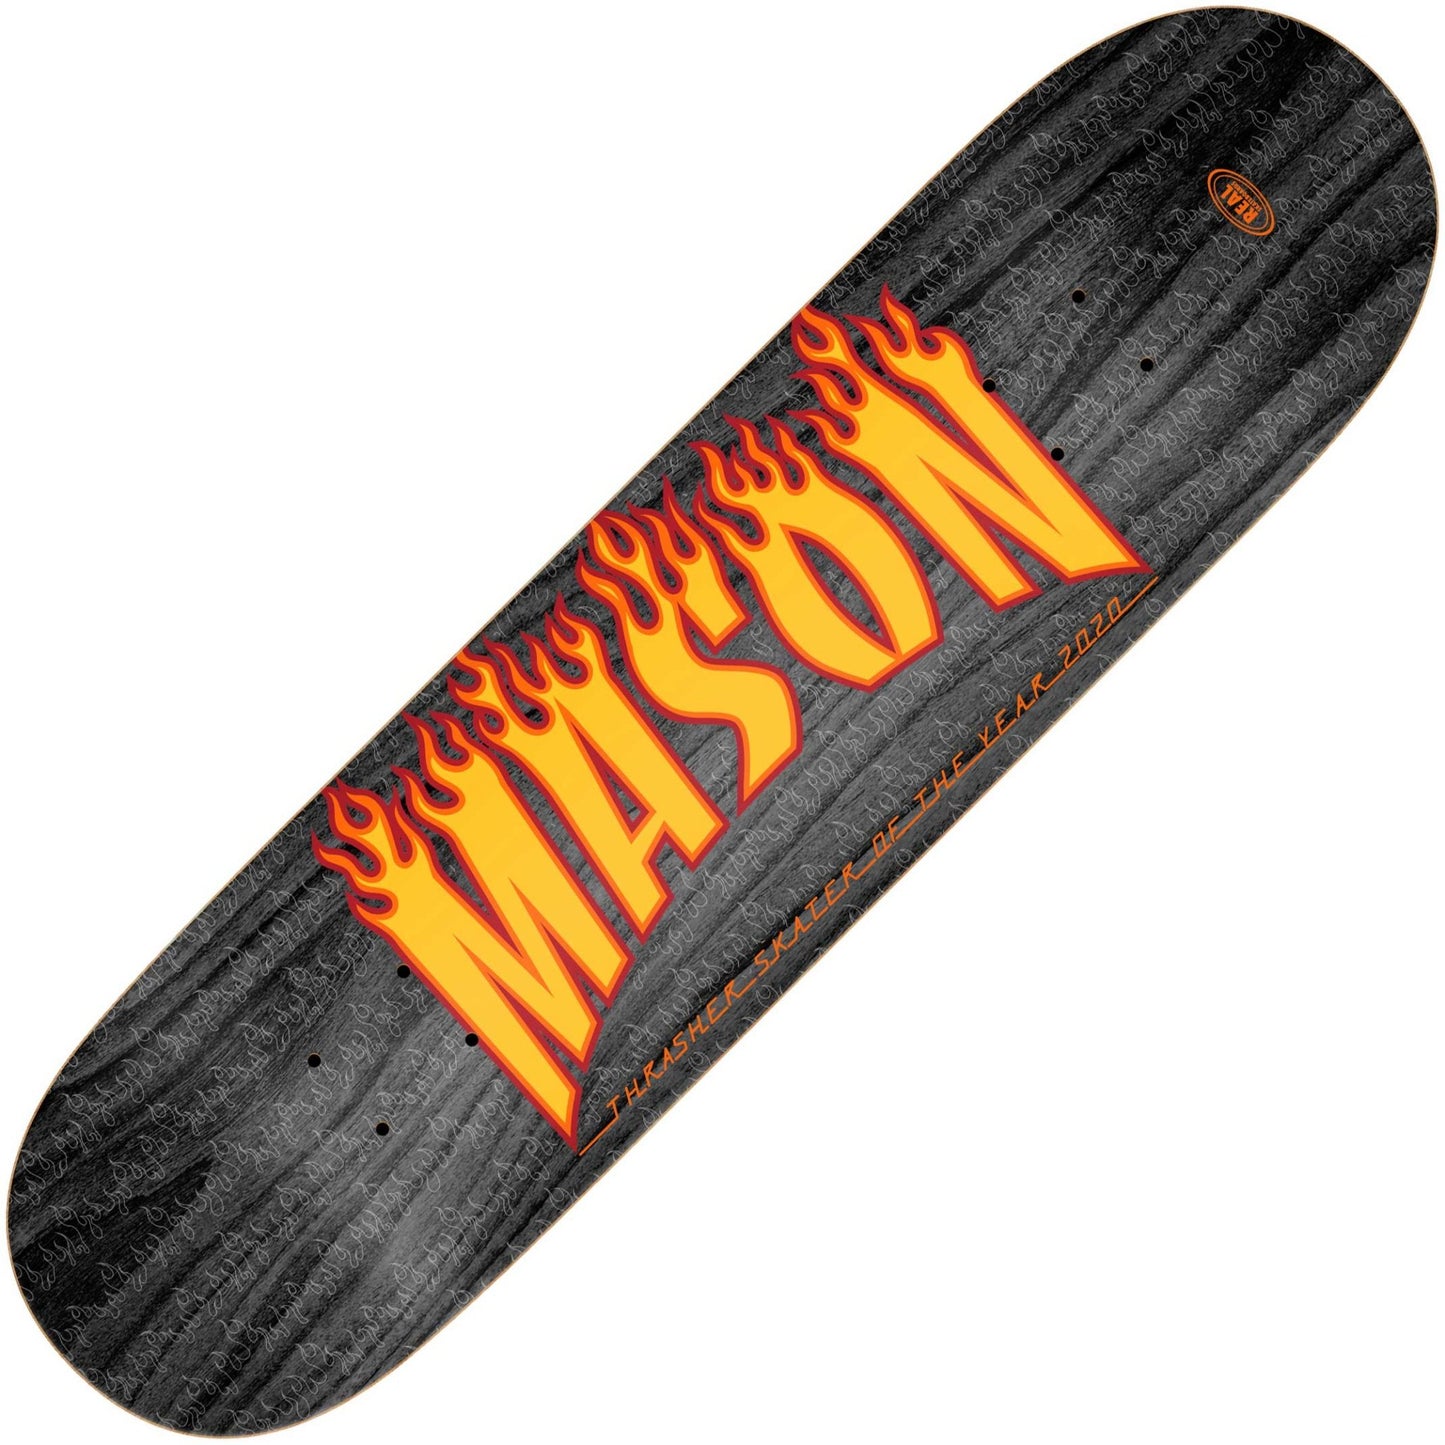 Real Mason SOTY deck (8.25") - Tiki Room Skateboards - 1